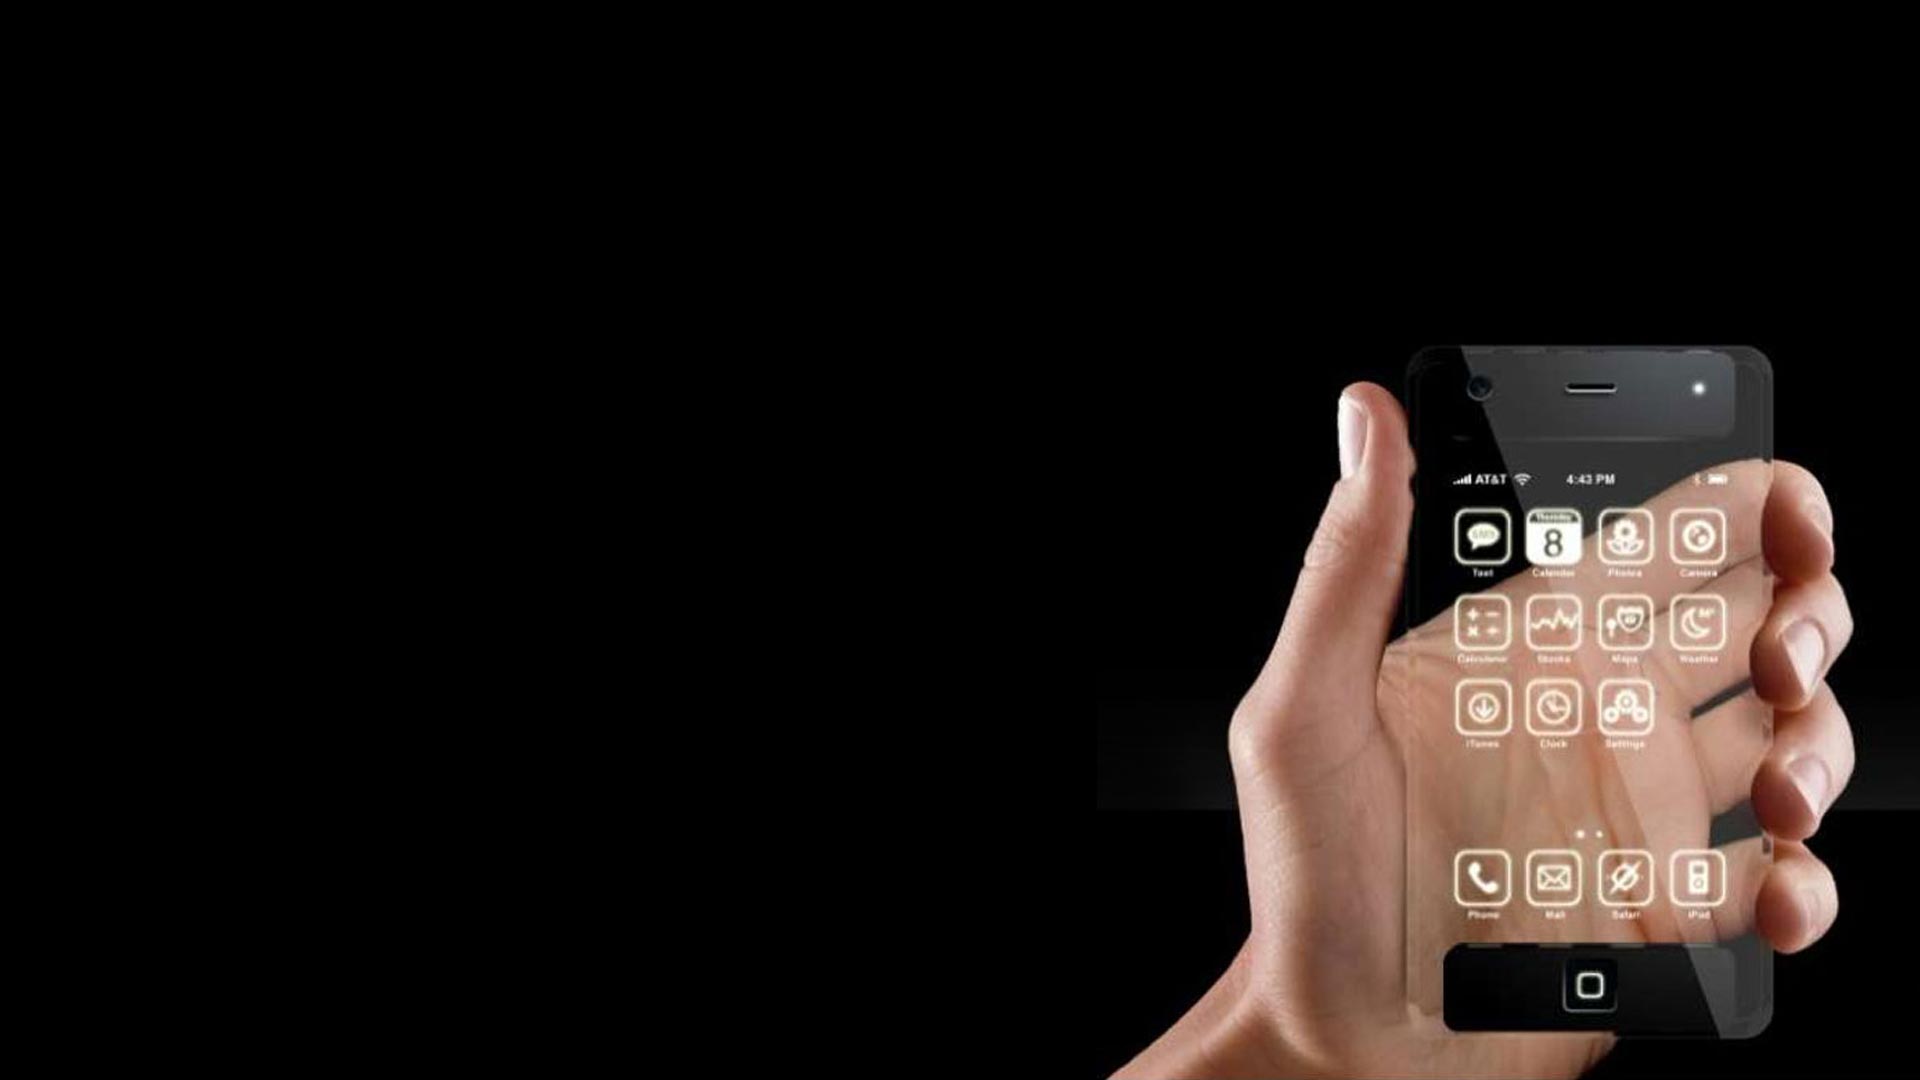 Transparent iPhone on black background